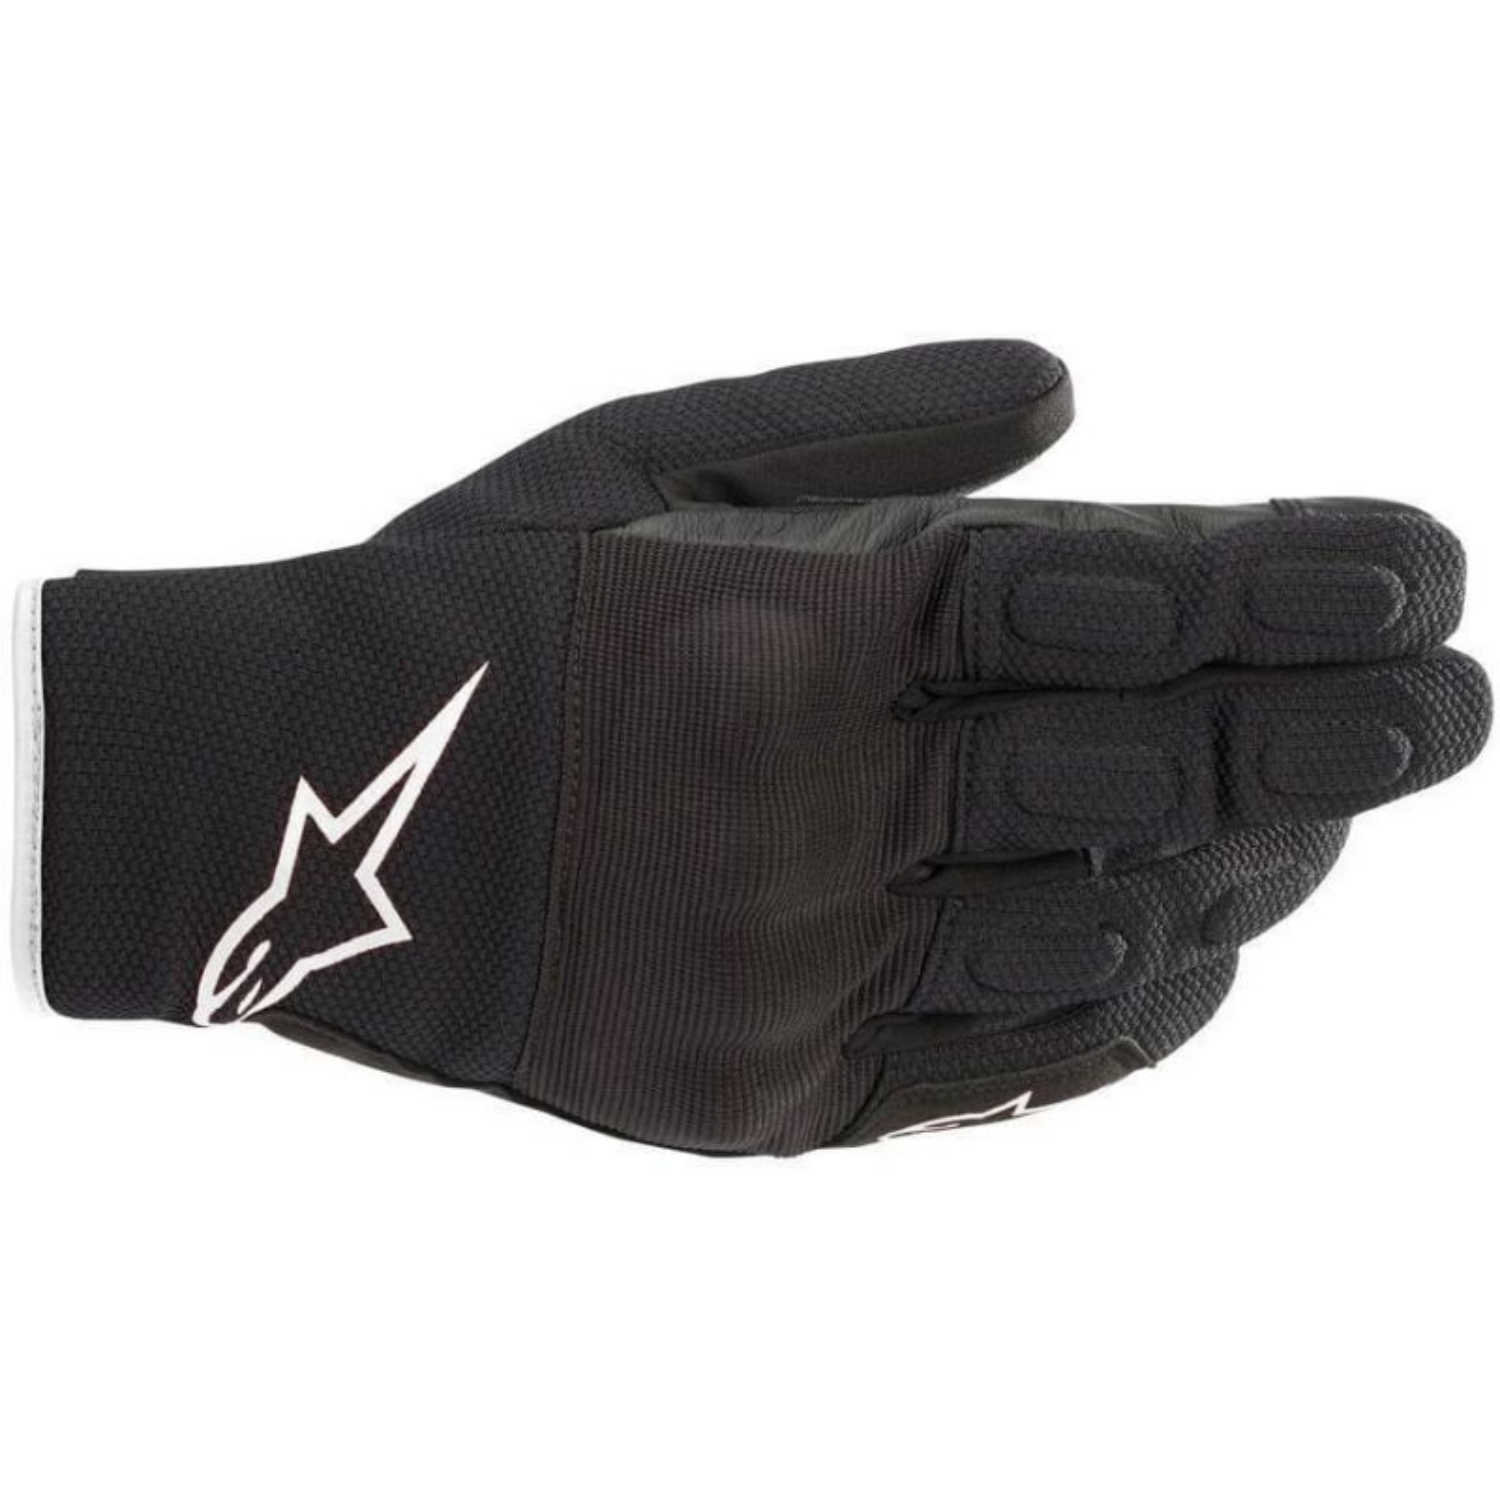 Image of Alpinestars S Max Drystar Gloves Black White Size 2XL ID 8059175098970